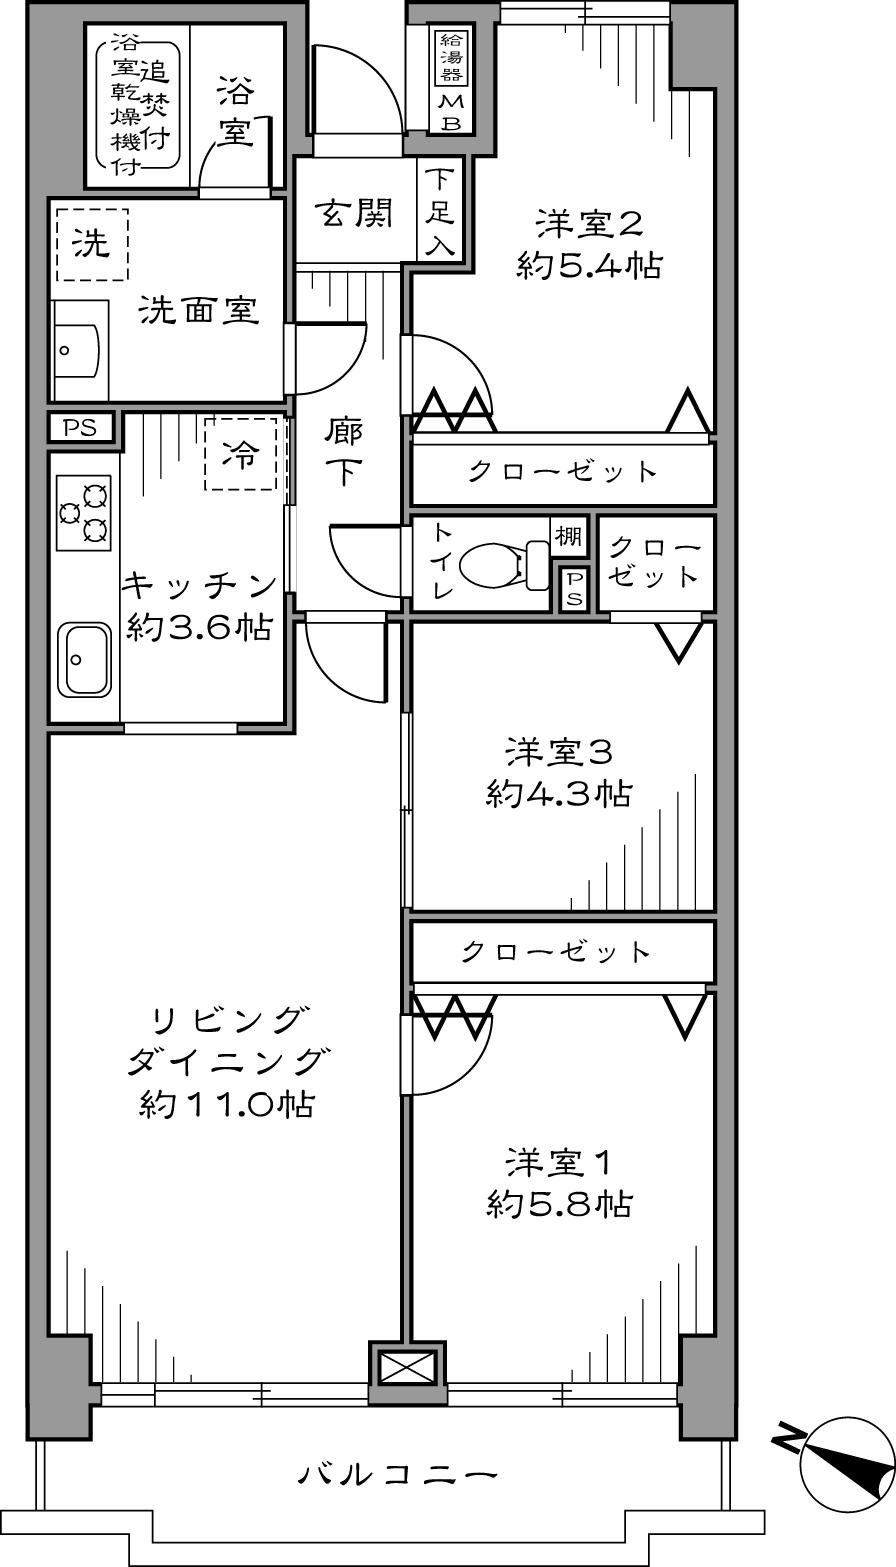 Floor plan. 3LDK, Price 30,800,000 yen, Occupied area 67.23 sq m , Balcony area 7.8 sq m 3LDK. All rooms with storage